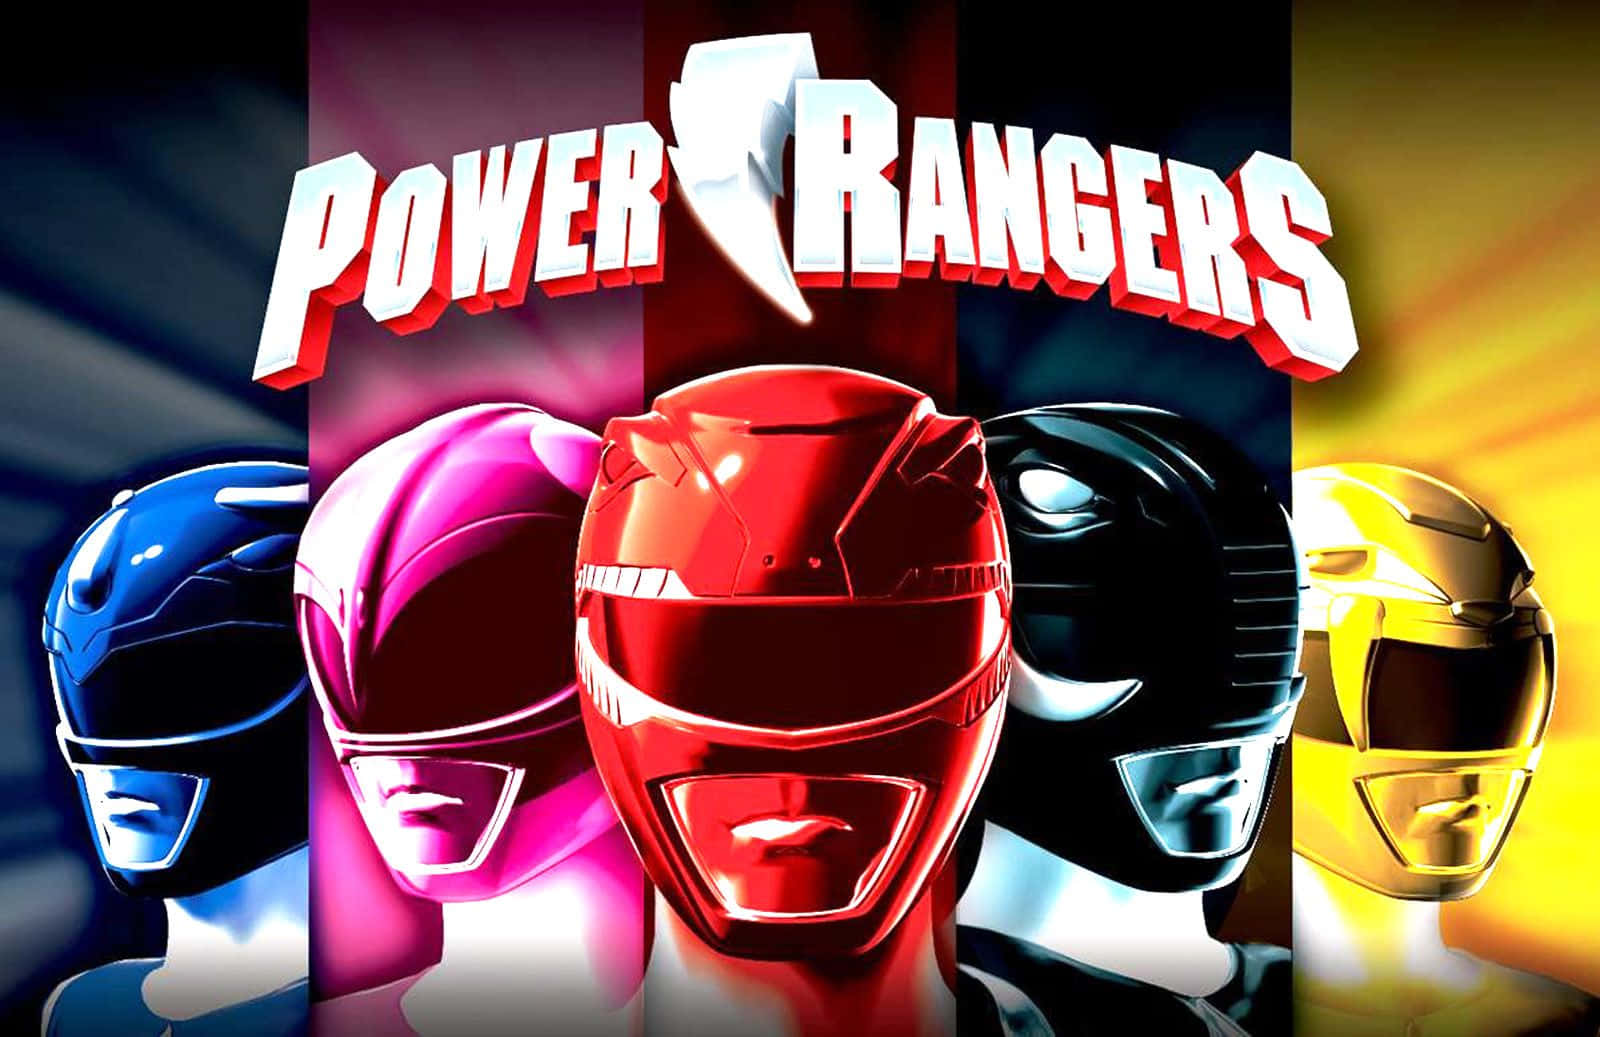 Power Rangers Background Wallpaper